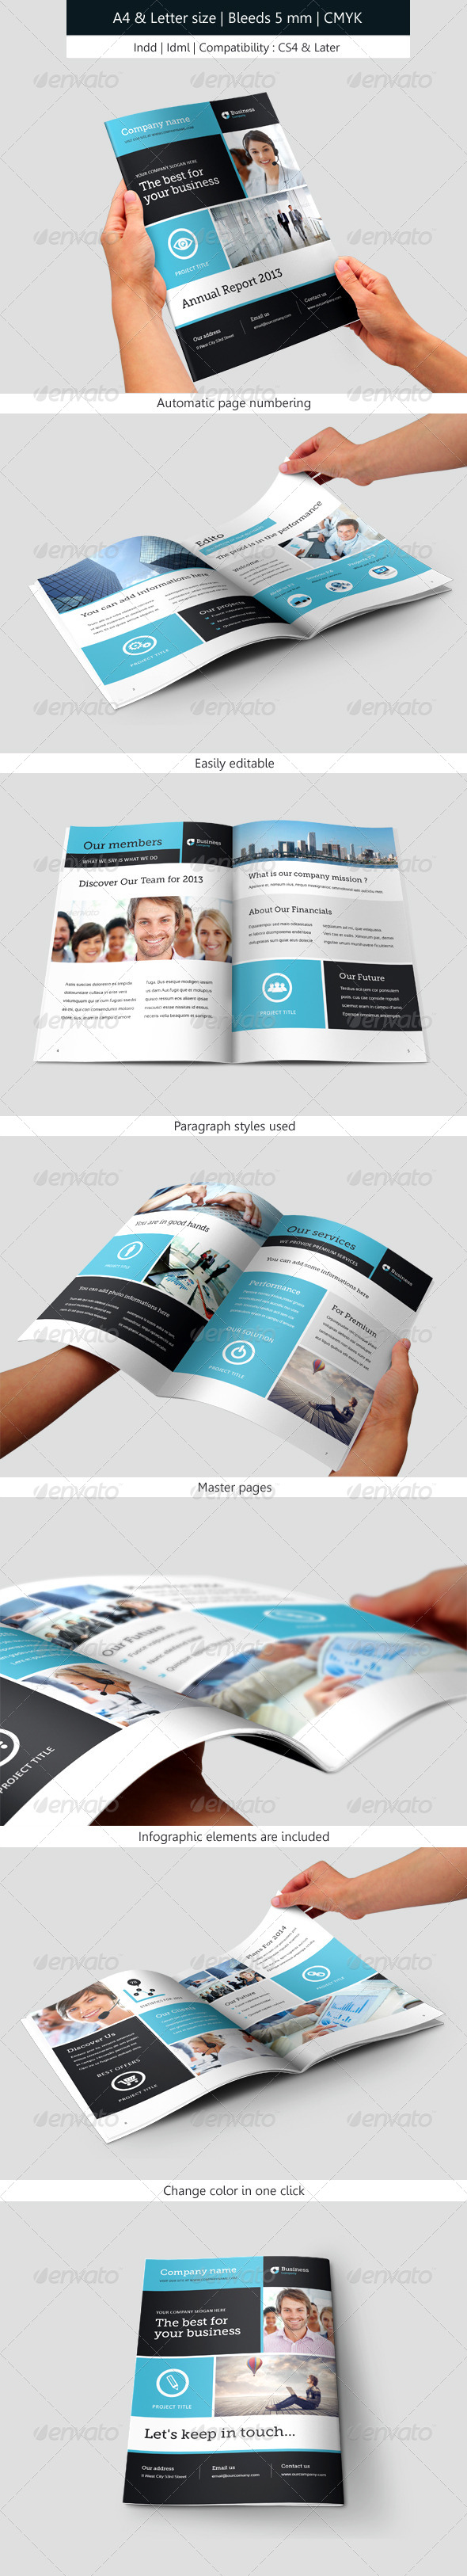 Corporate Brochure Template Annual Report by franceschi_rene | GraphicRiver